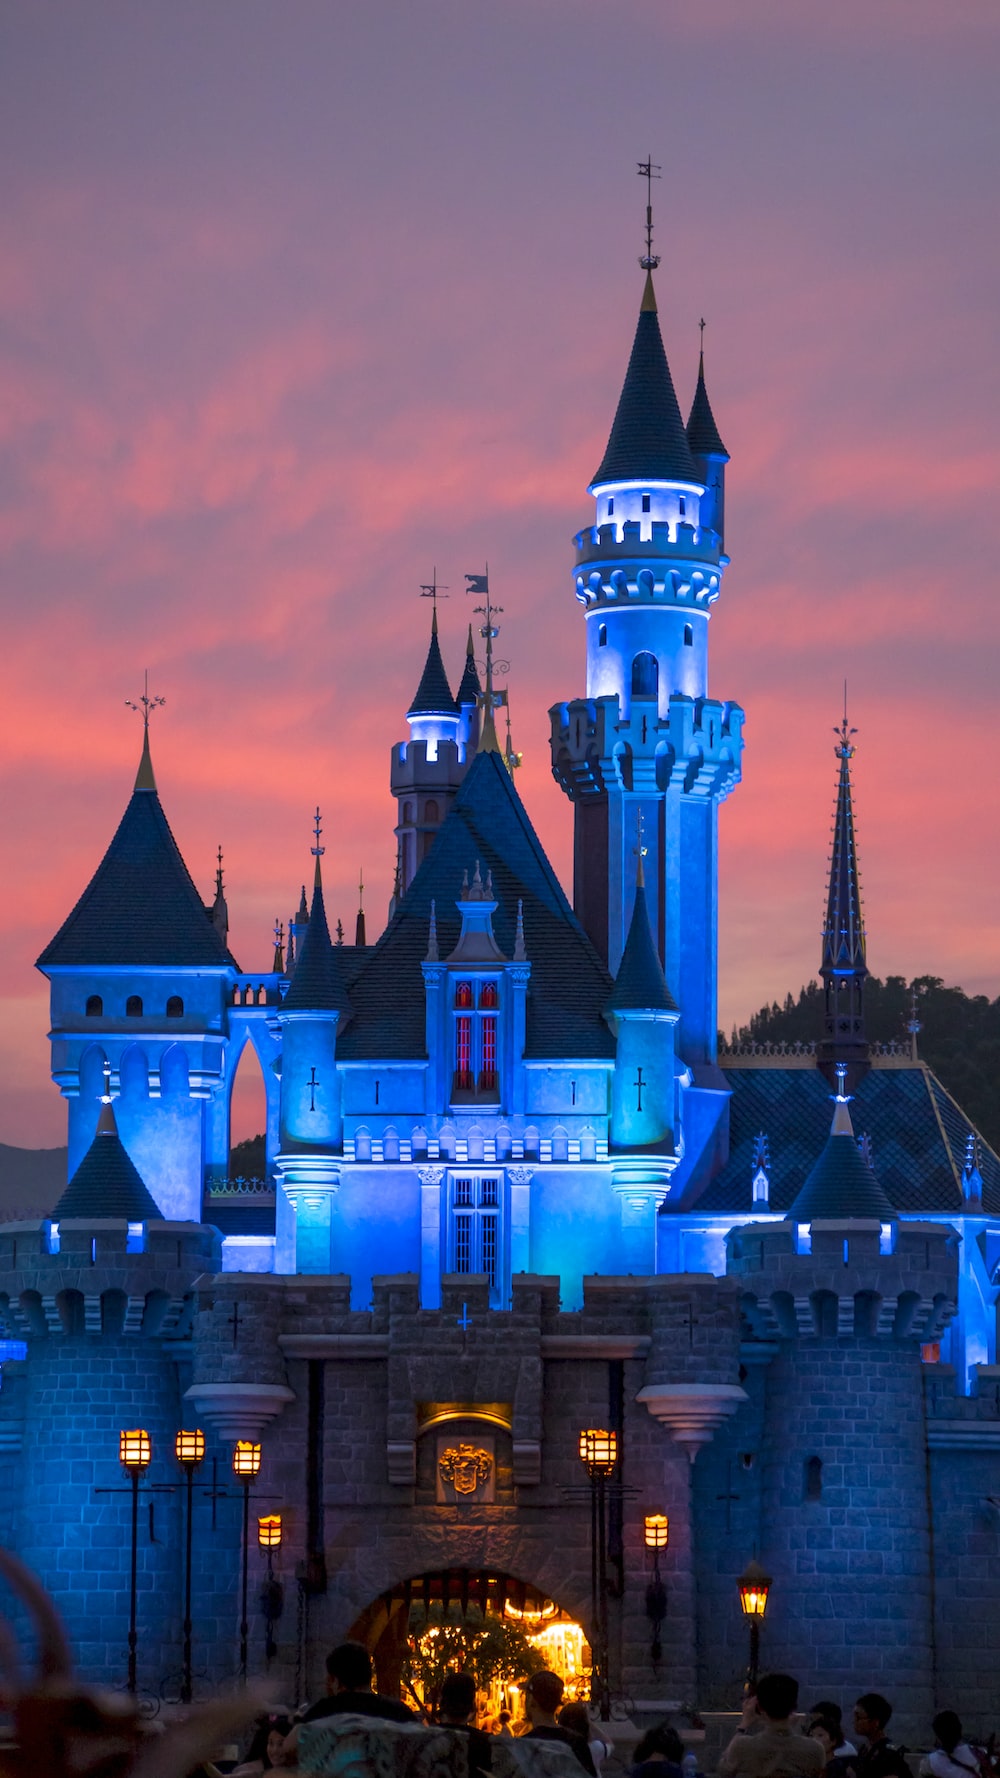 Disney Castle Picture. Download Free Image